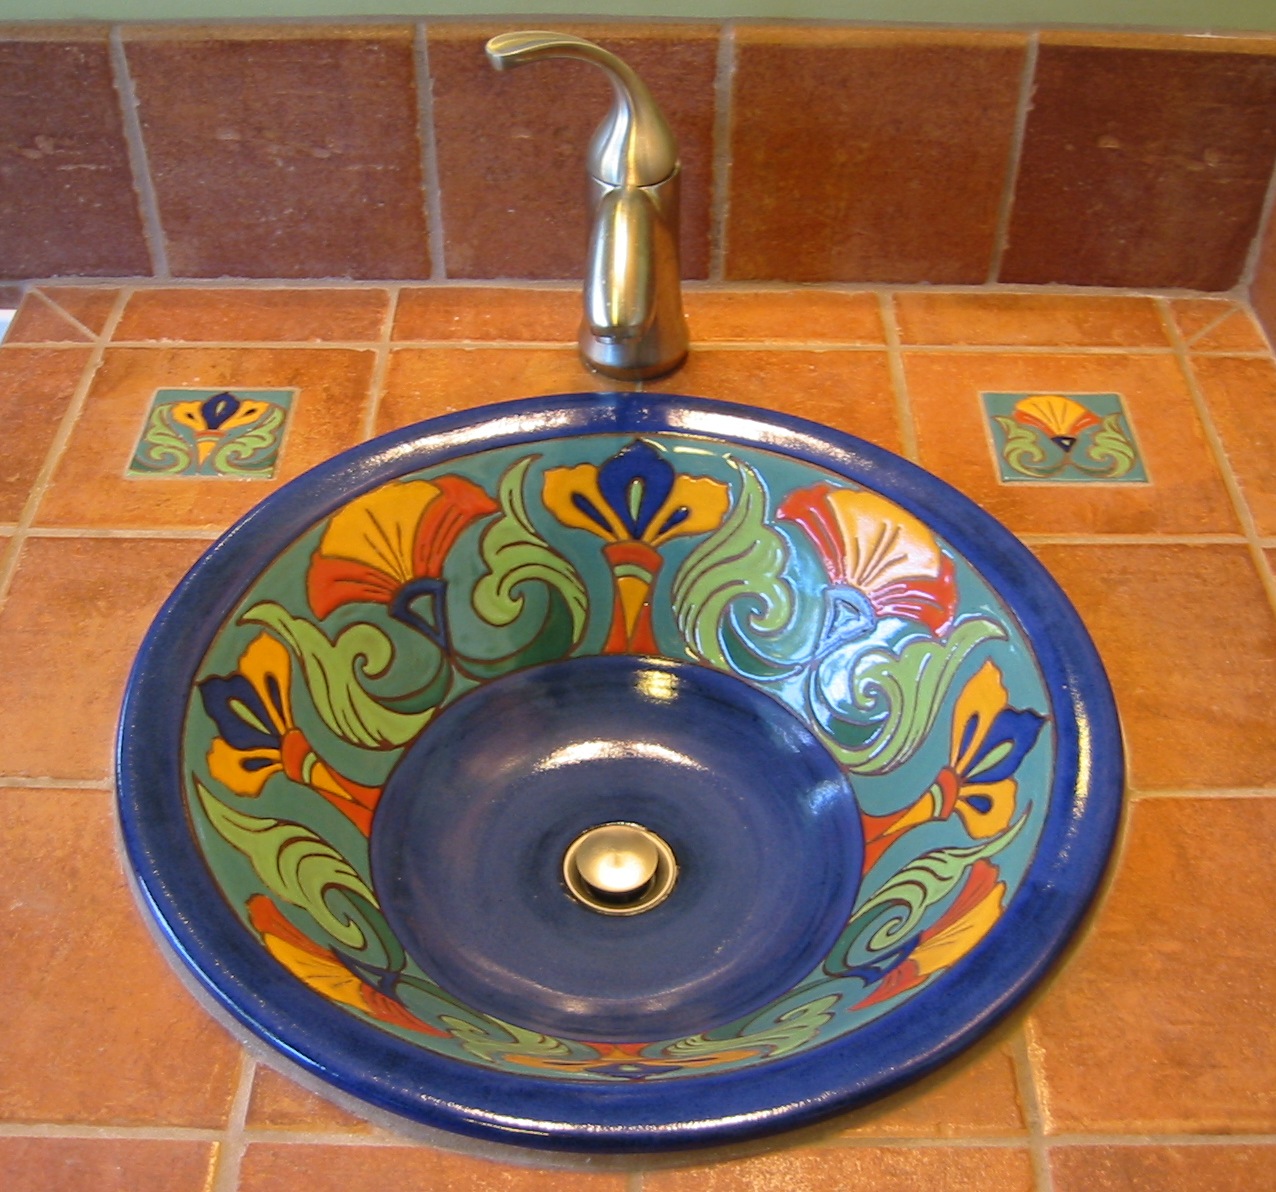 Cobalt Bule Sink with Cuerda Seca Design Set in California Tile Bathroom